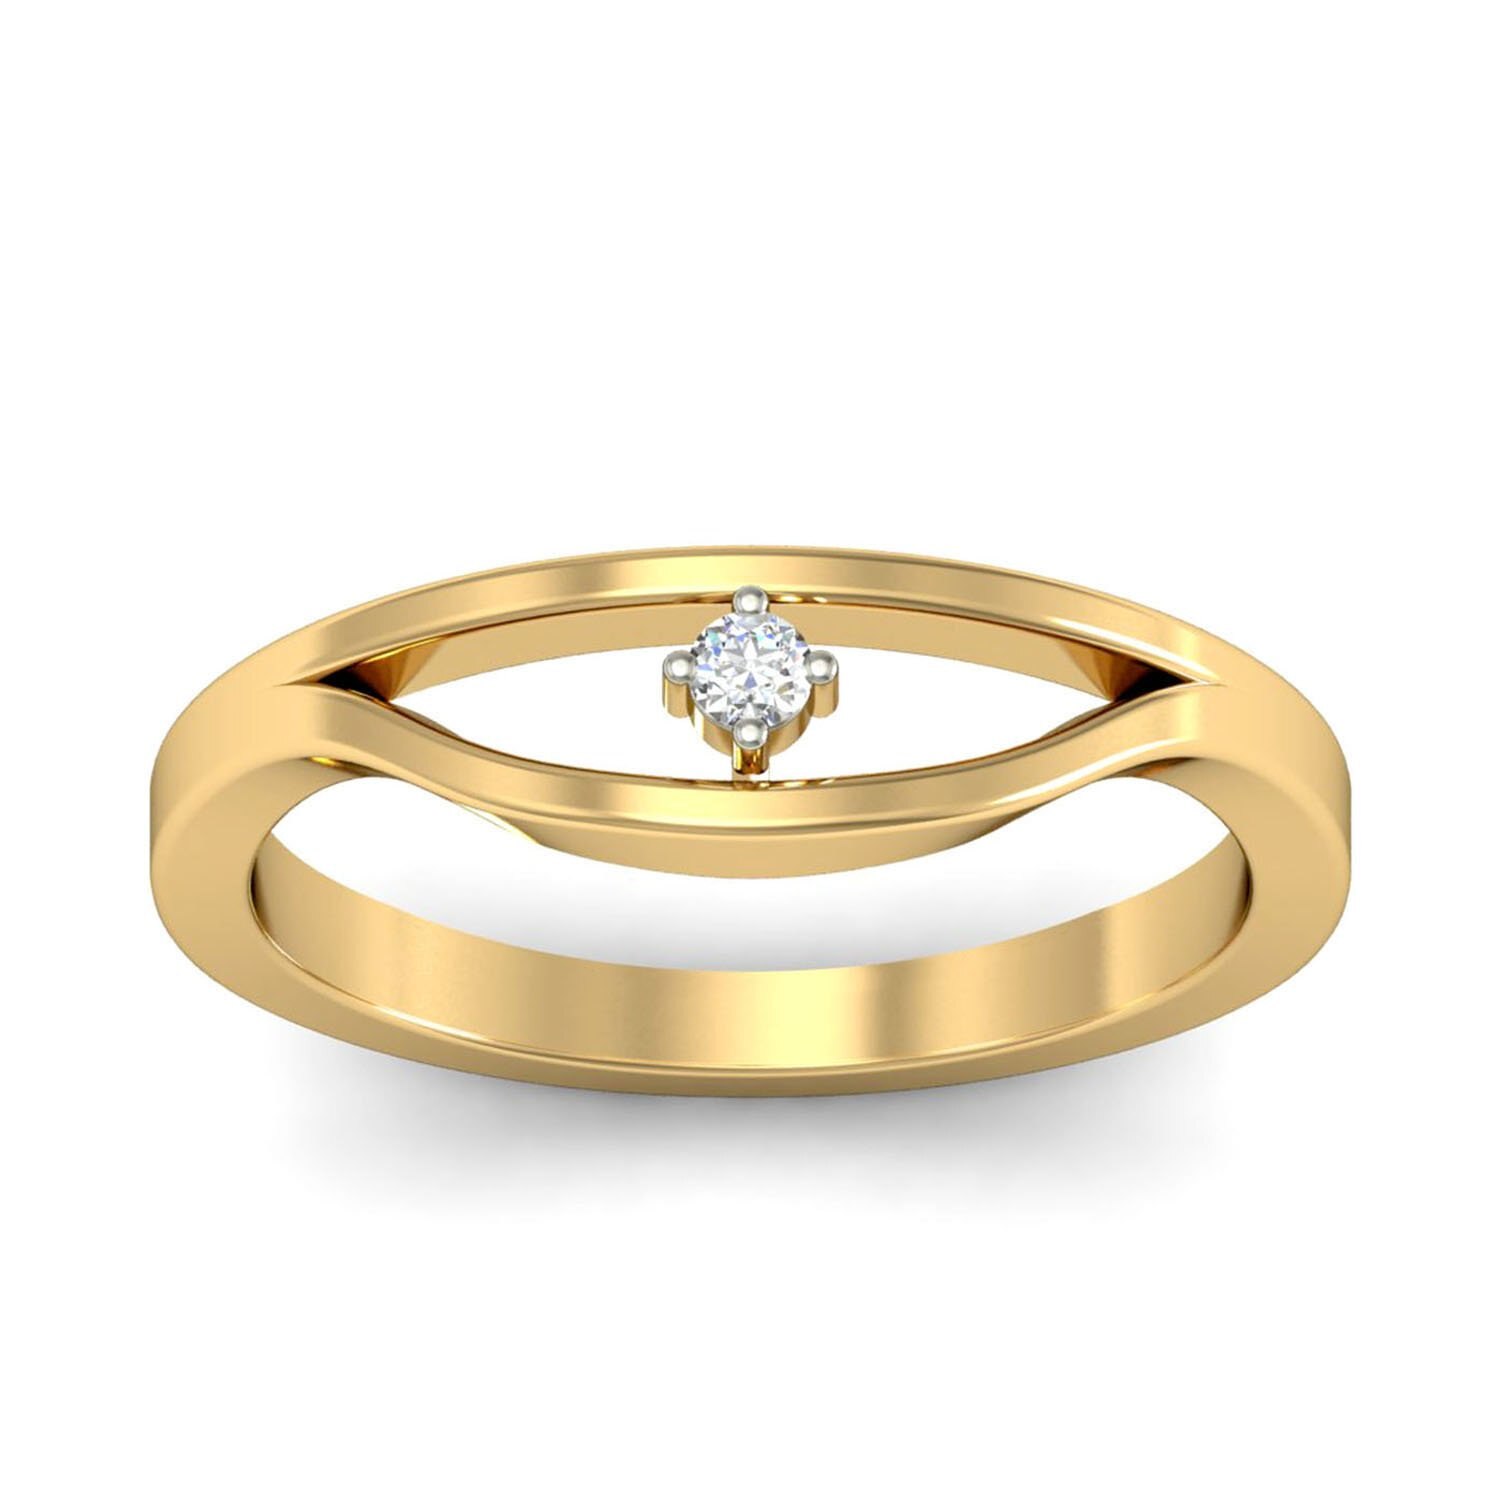 Jewellery Under 5000 - Gold Plated Jewelry under 5K Online | Zariin